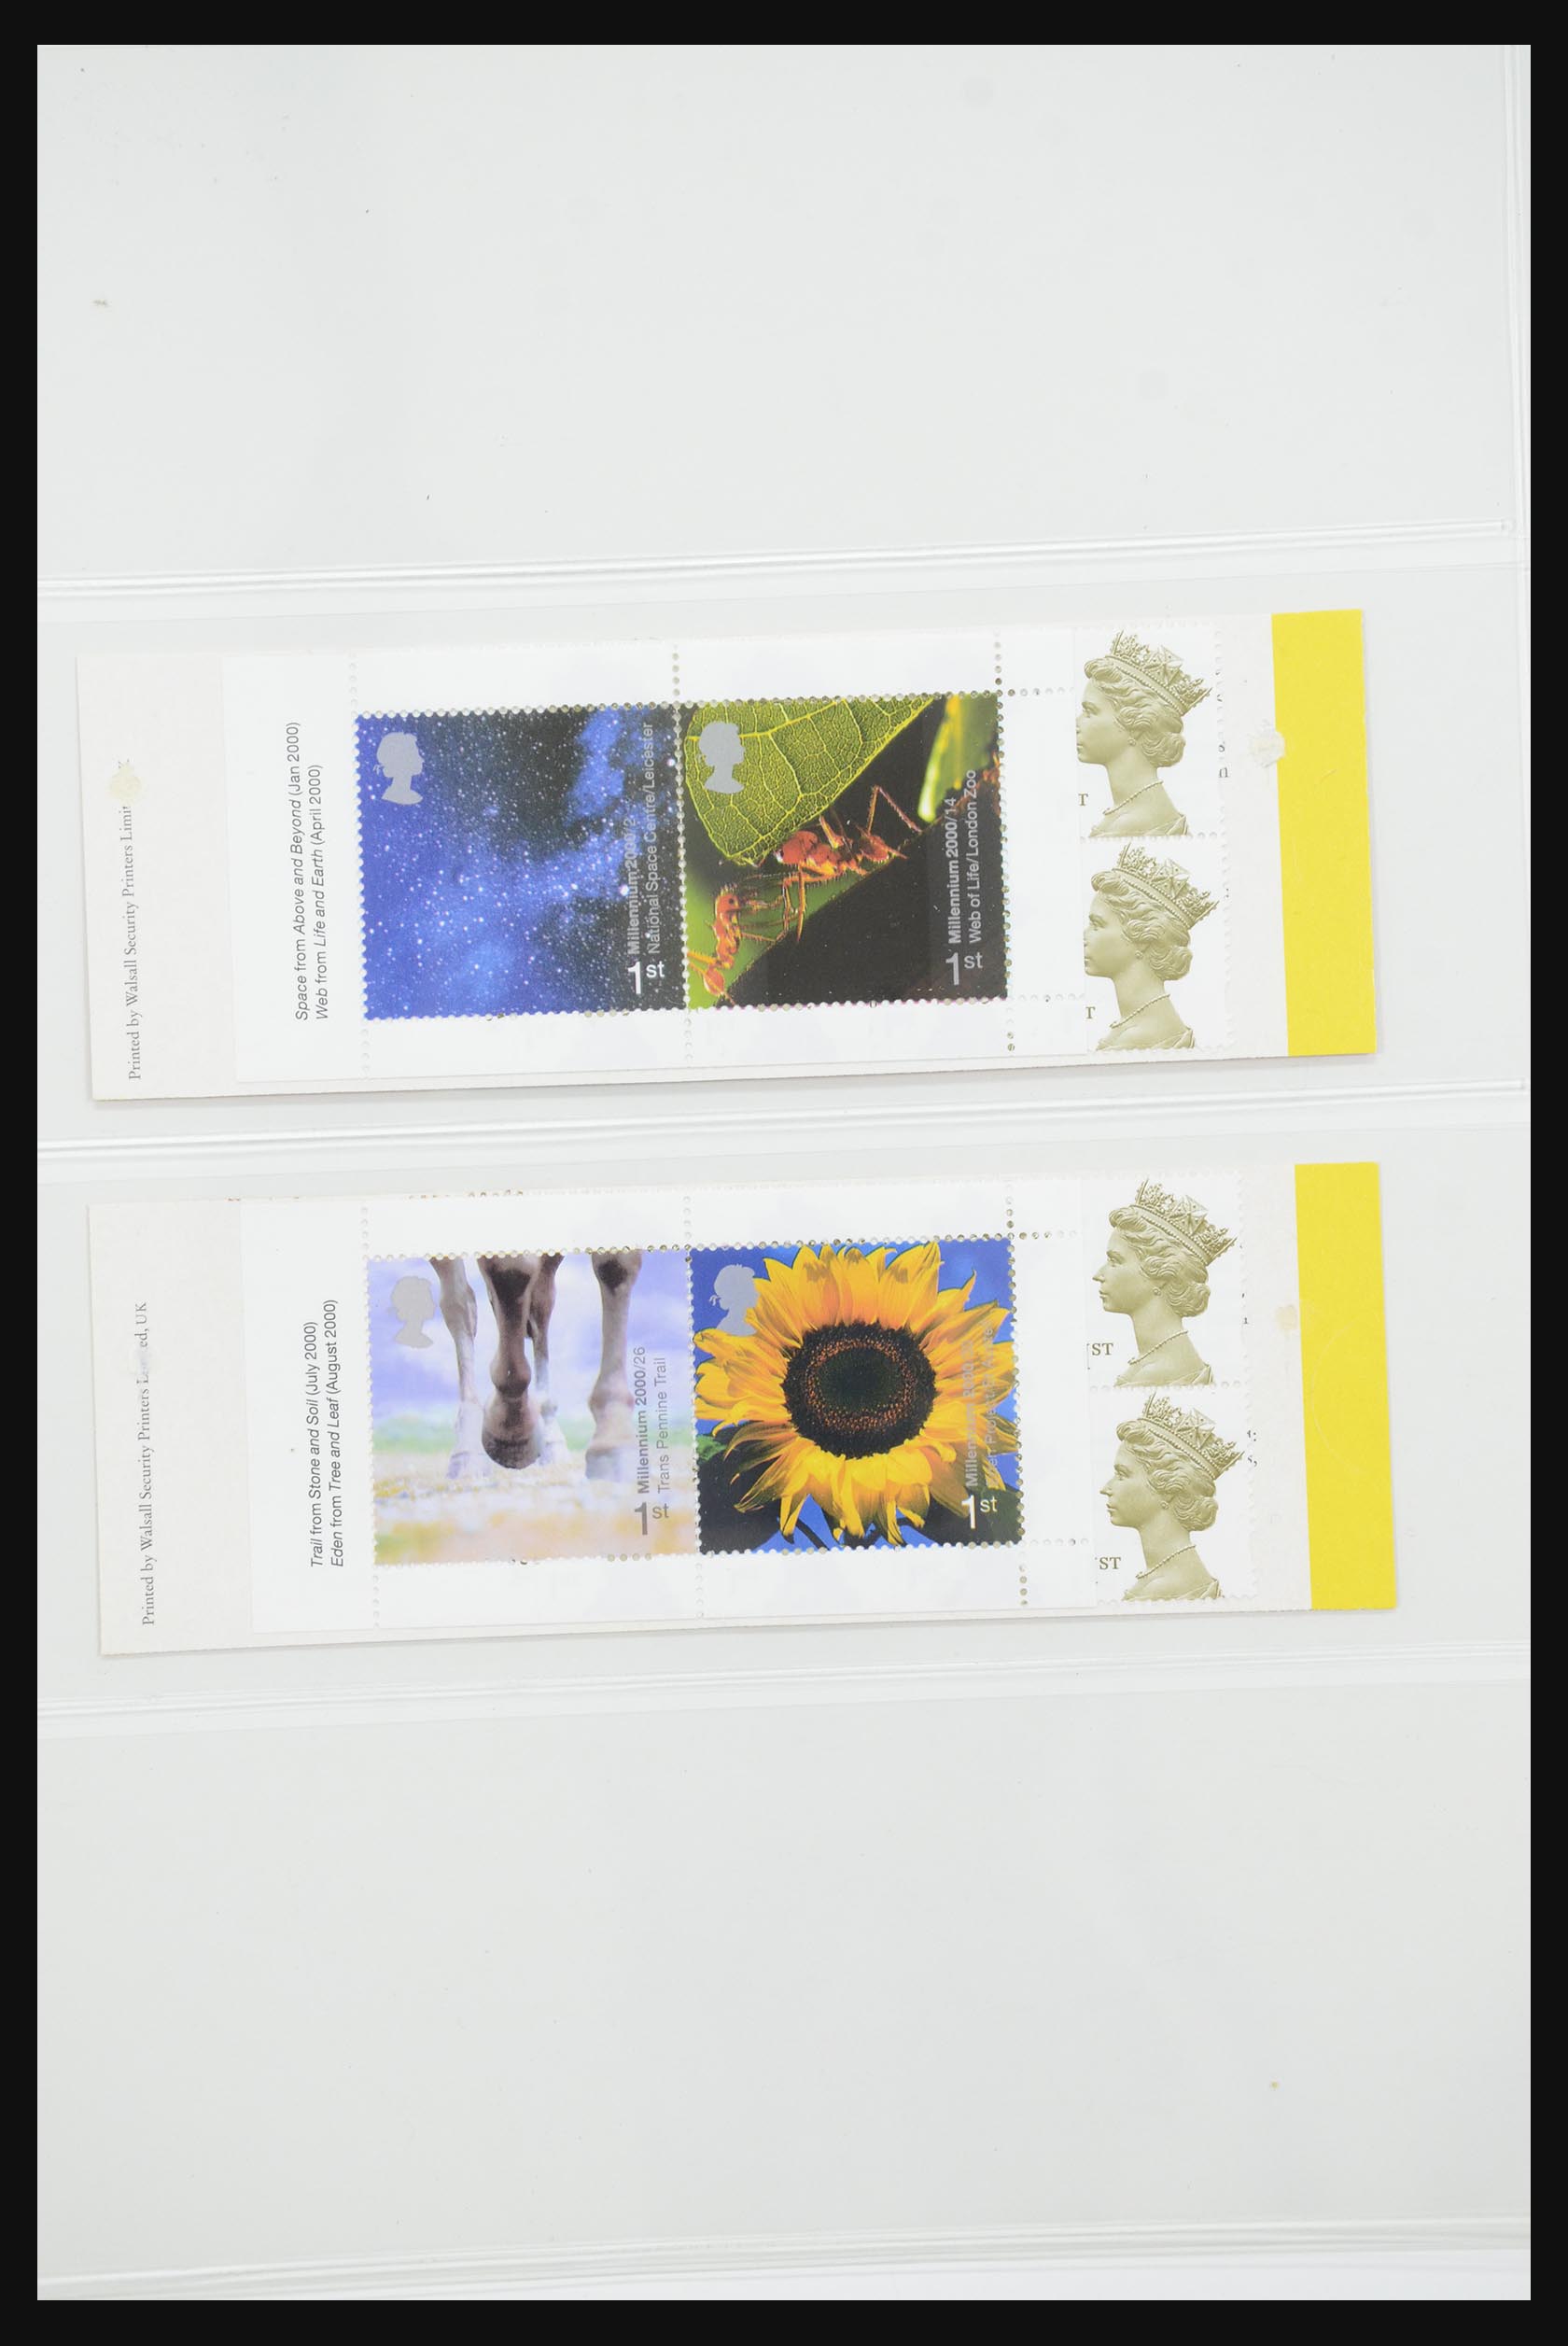 31960 056 - 31960 Great Britain stampbooklets 1989-2000.